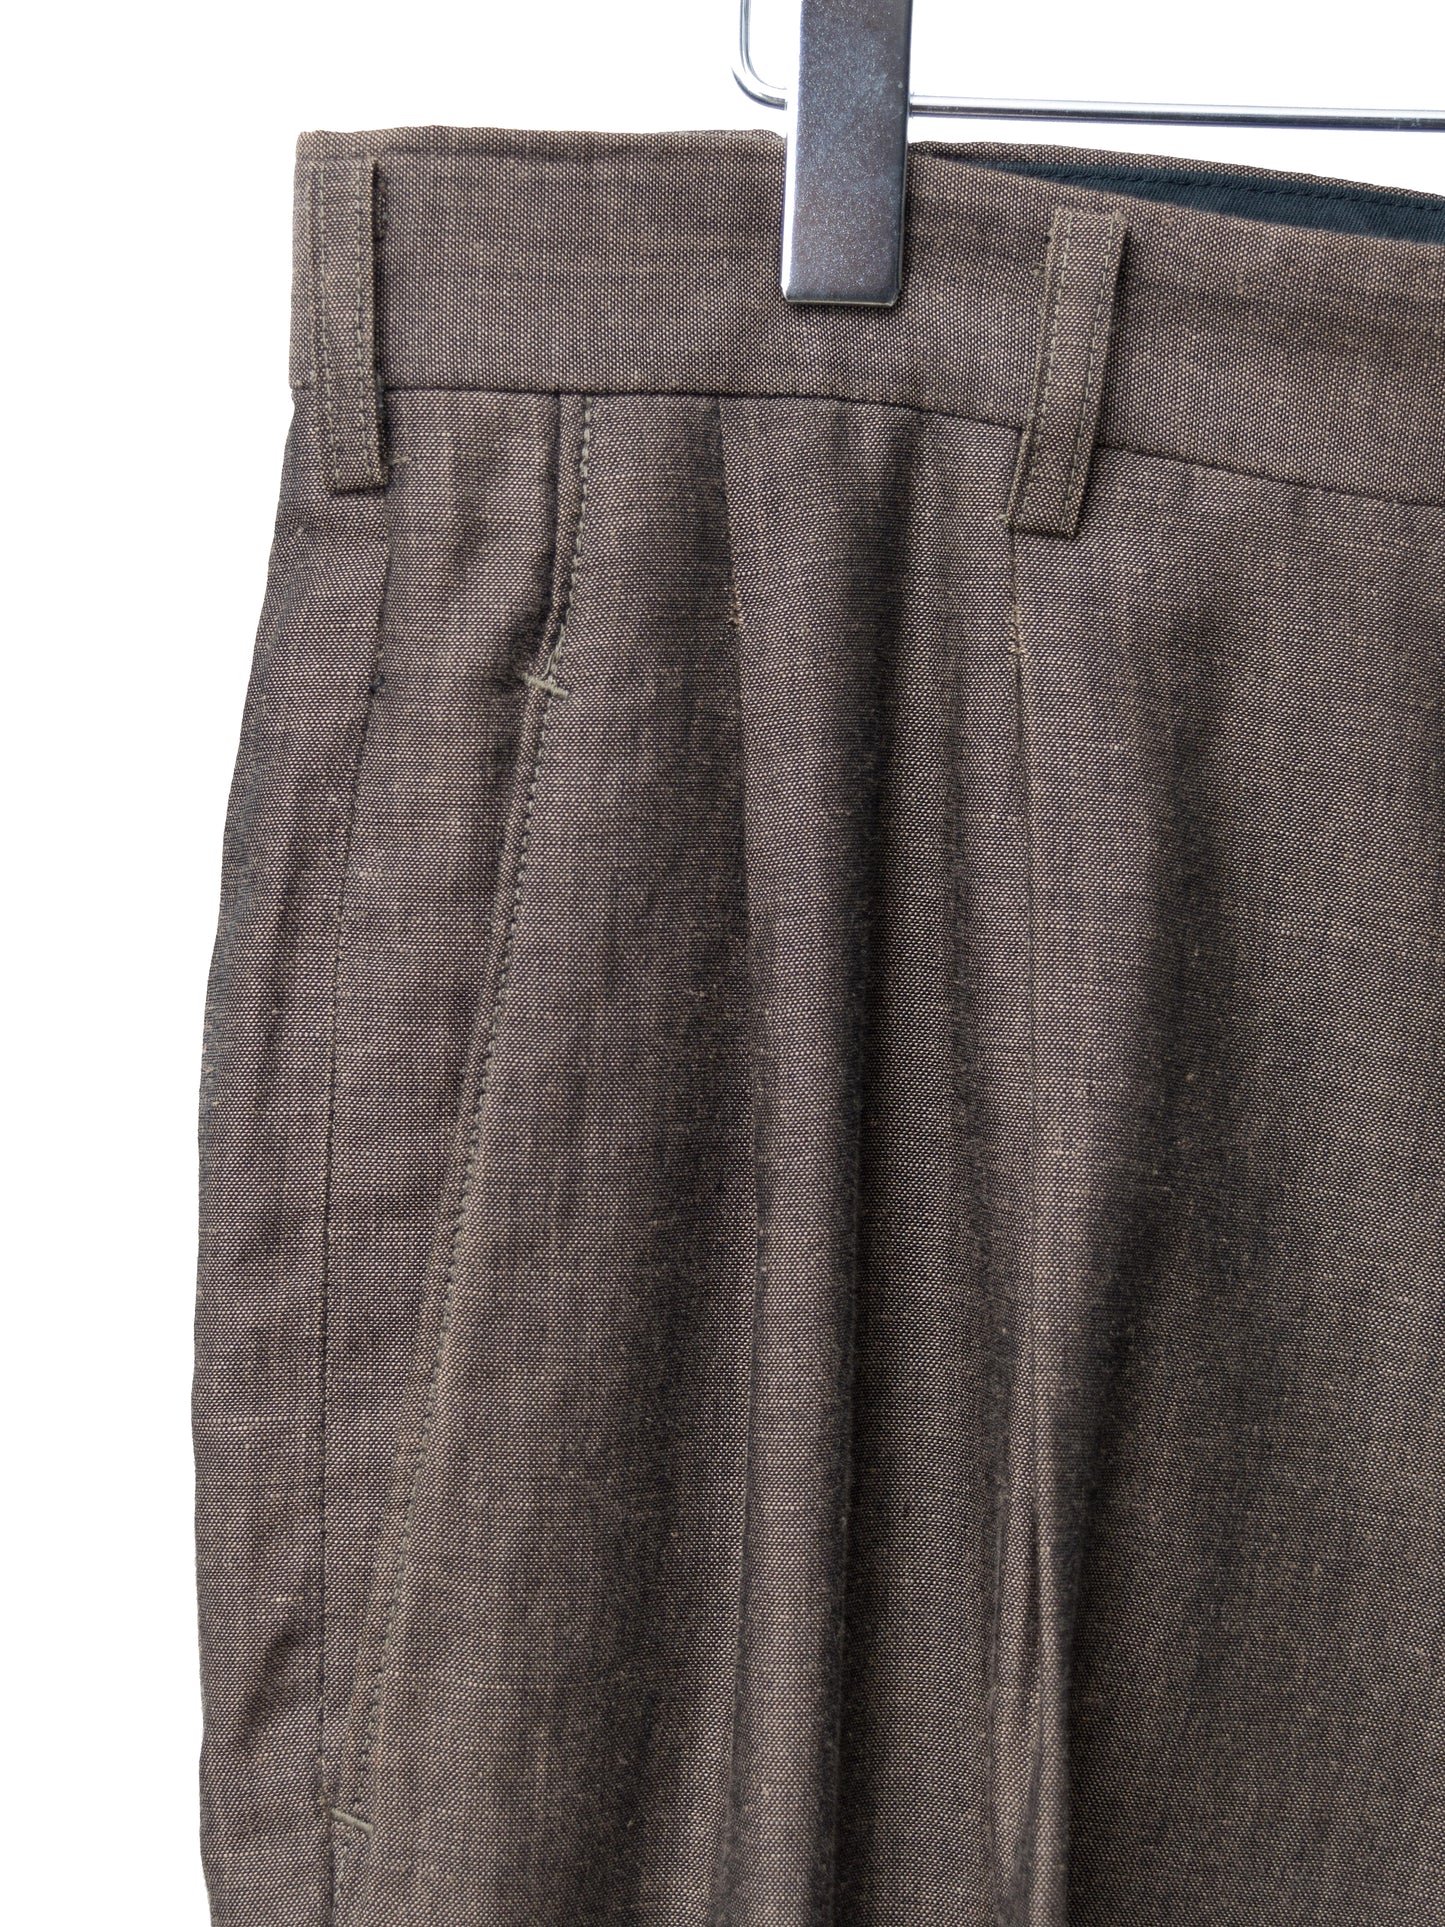 double pleat trousers bark ∙ linen wool rayon nylon ∙ small